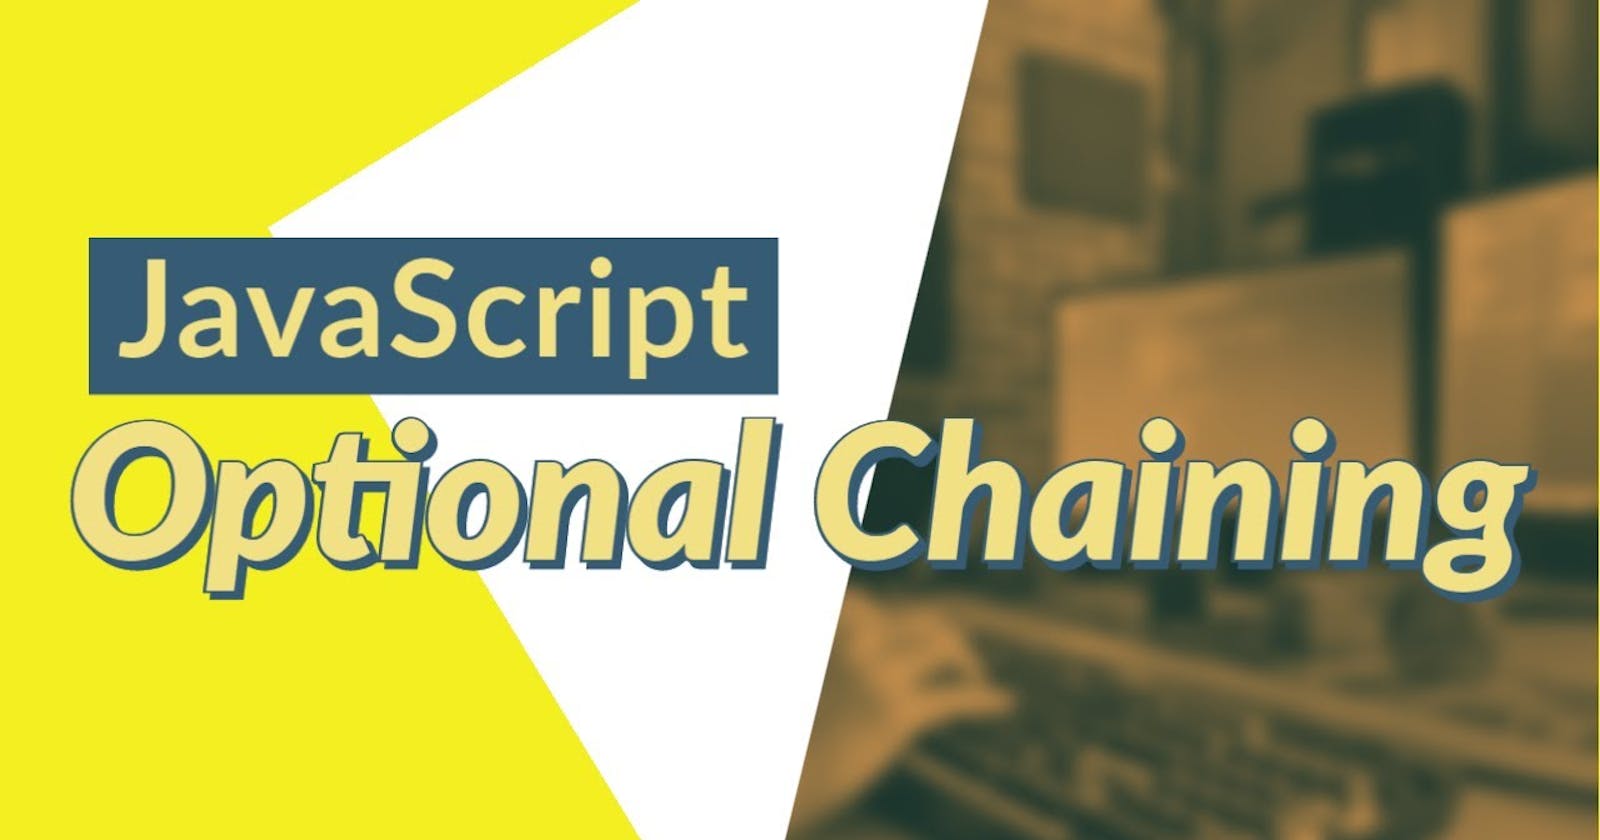 Optional chaining in JavaScript